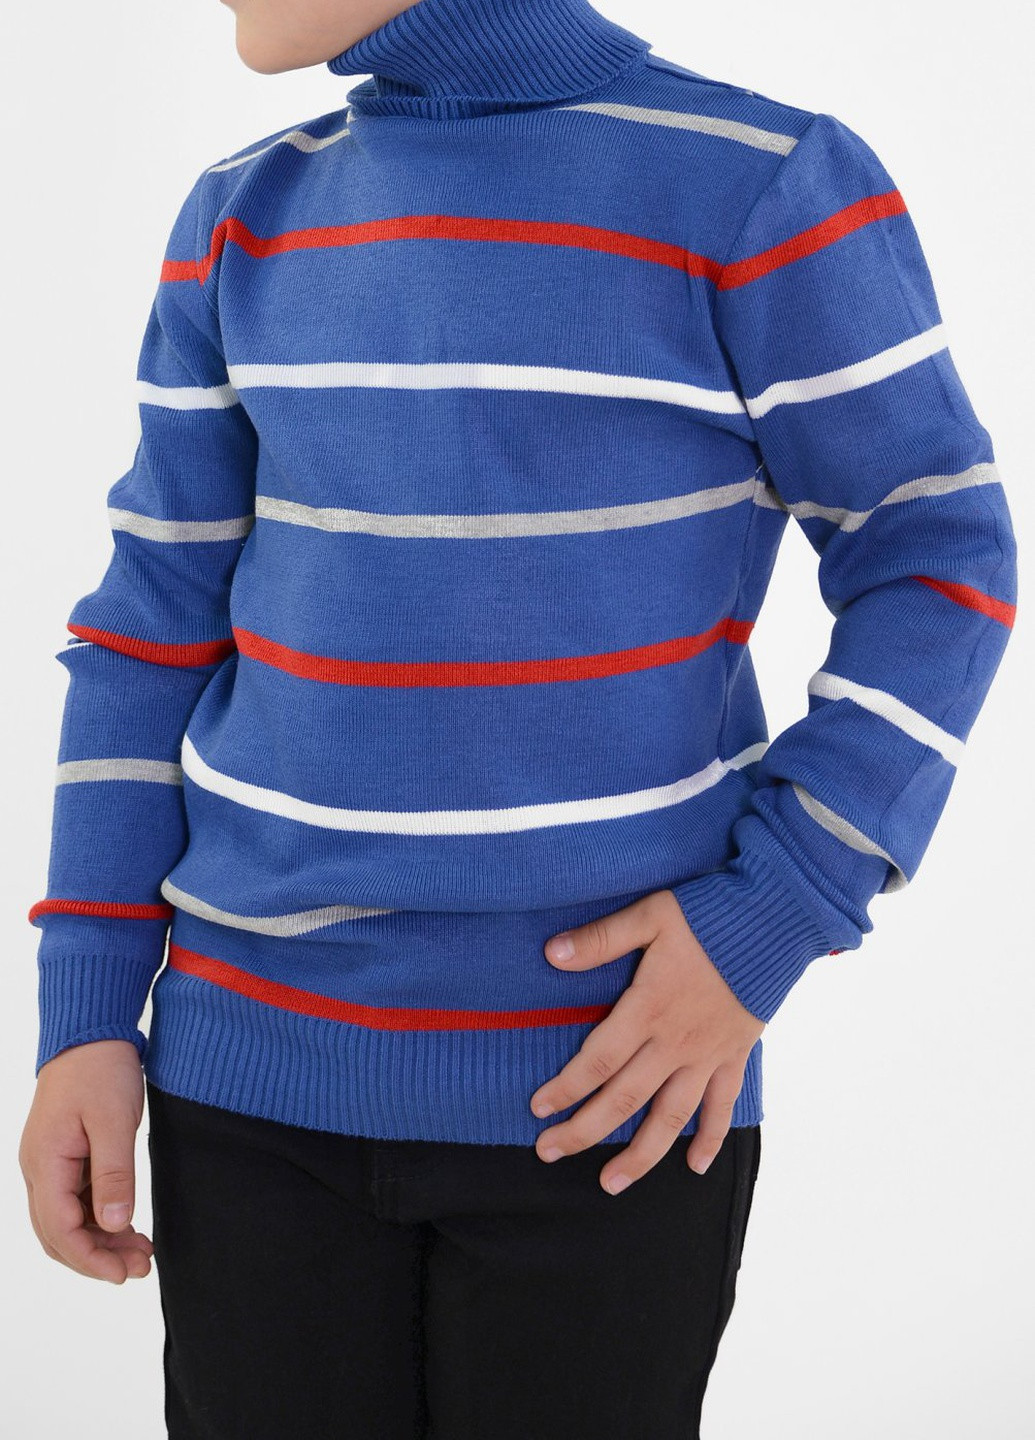 Синій светри светр в смужку на хлопчика (свитер полоска)14729-681 Lemanta